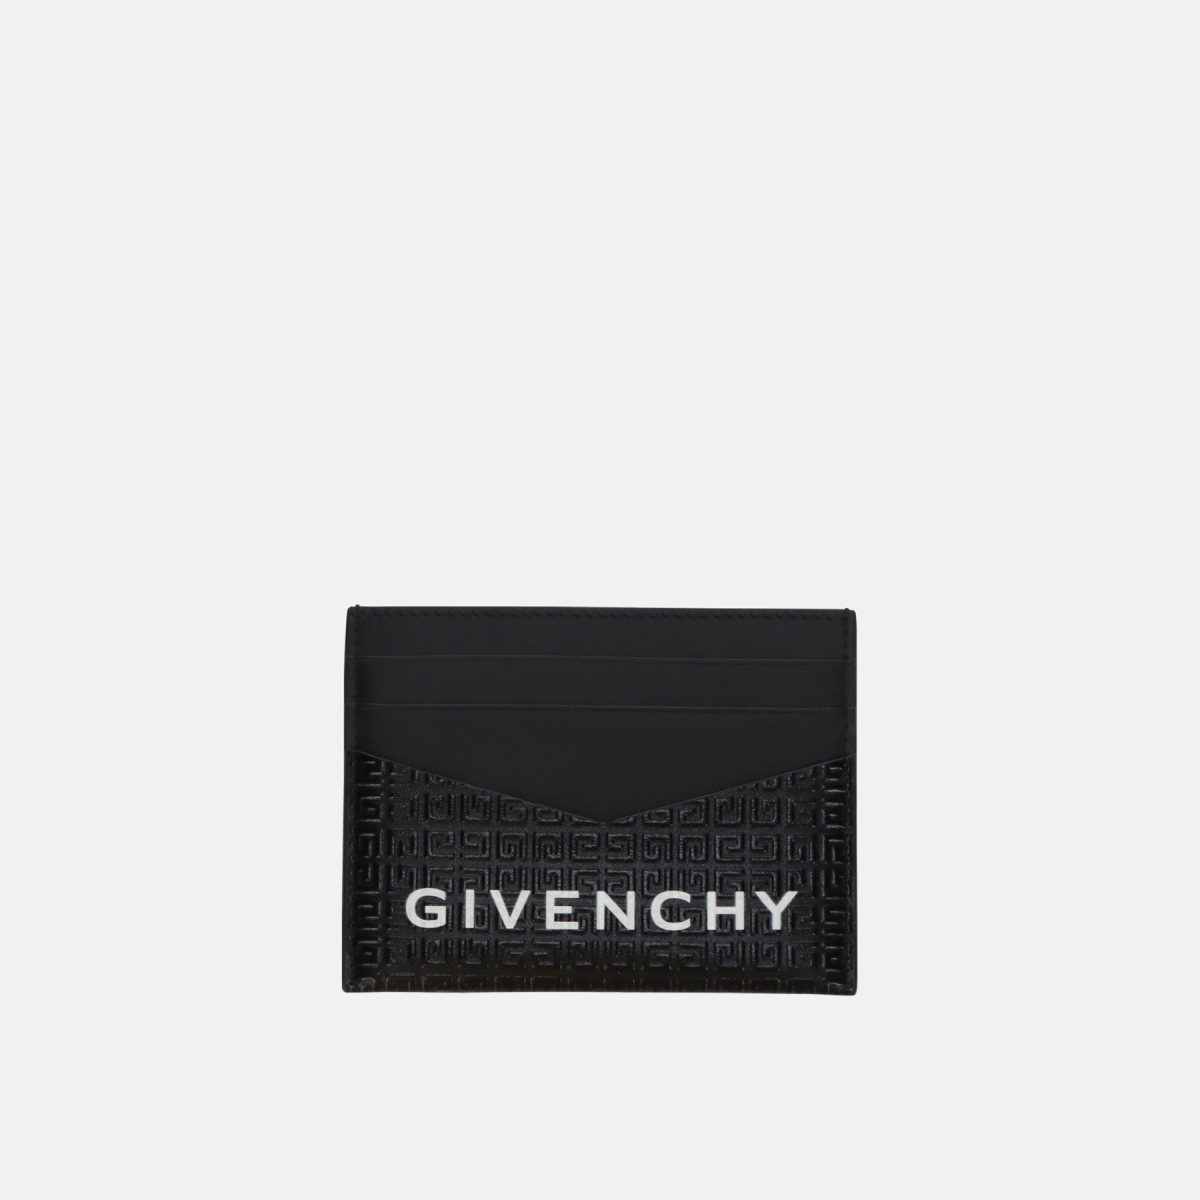 Givenchy card holder